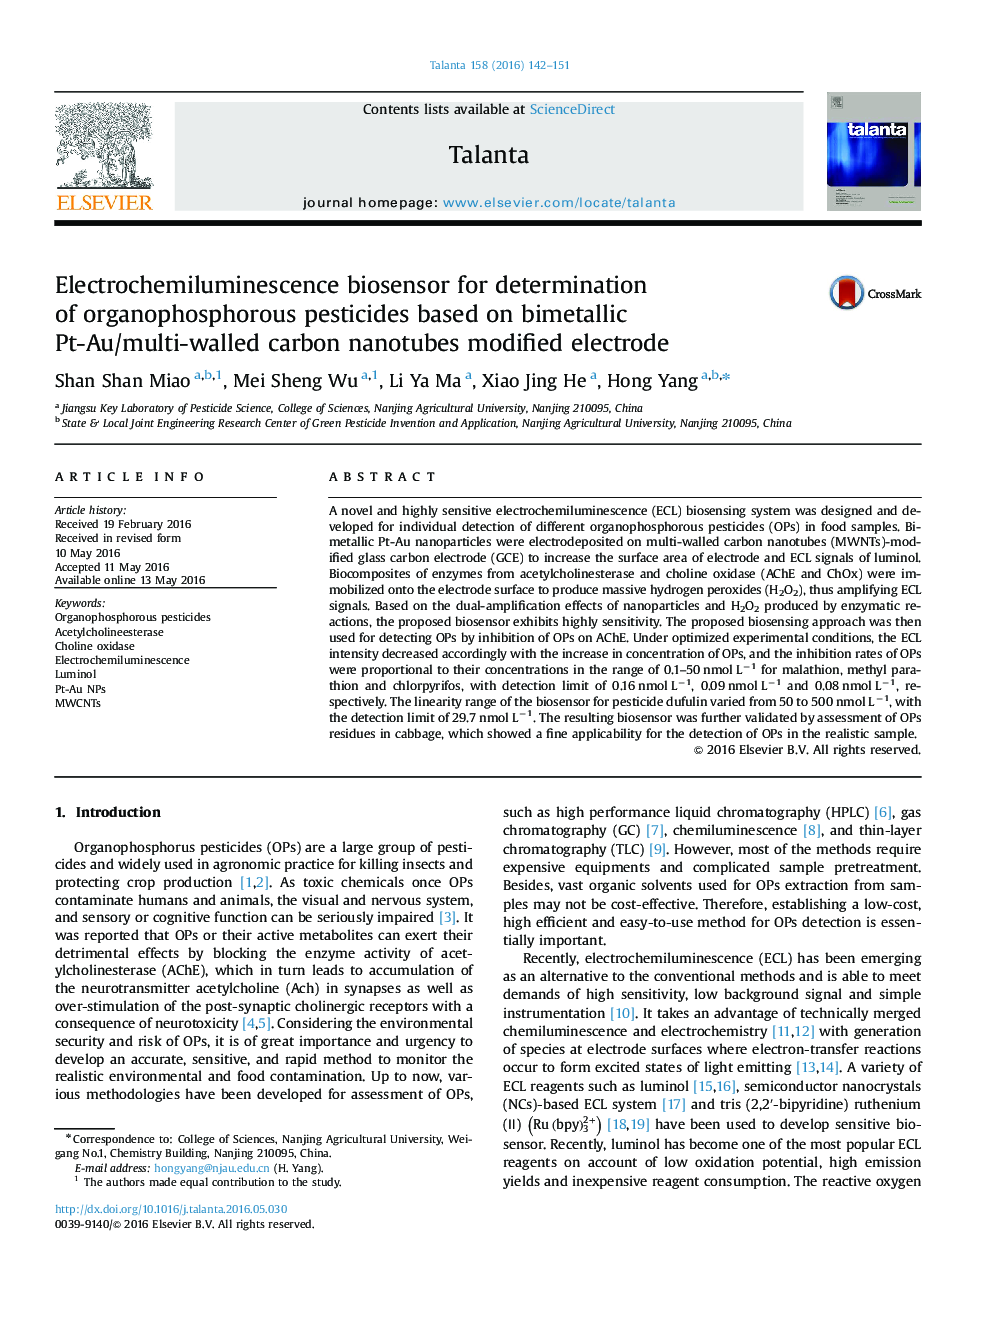 Electrochemiluminescence biosensor for determination of organophosphorous pesticides based on bimetallic Pt-Au/multi-walled carbon nanotubes modified electrode